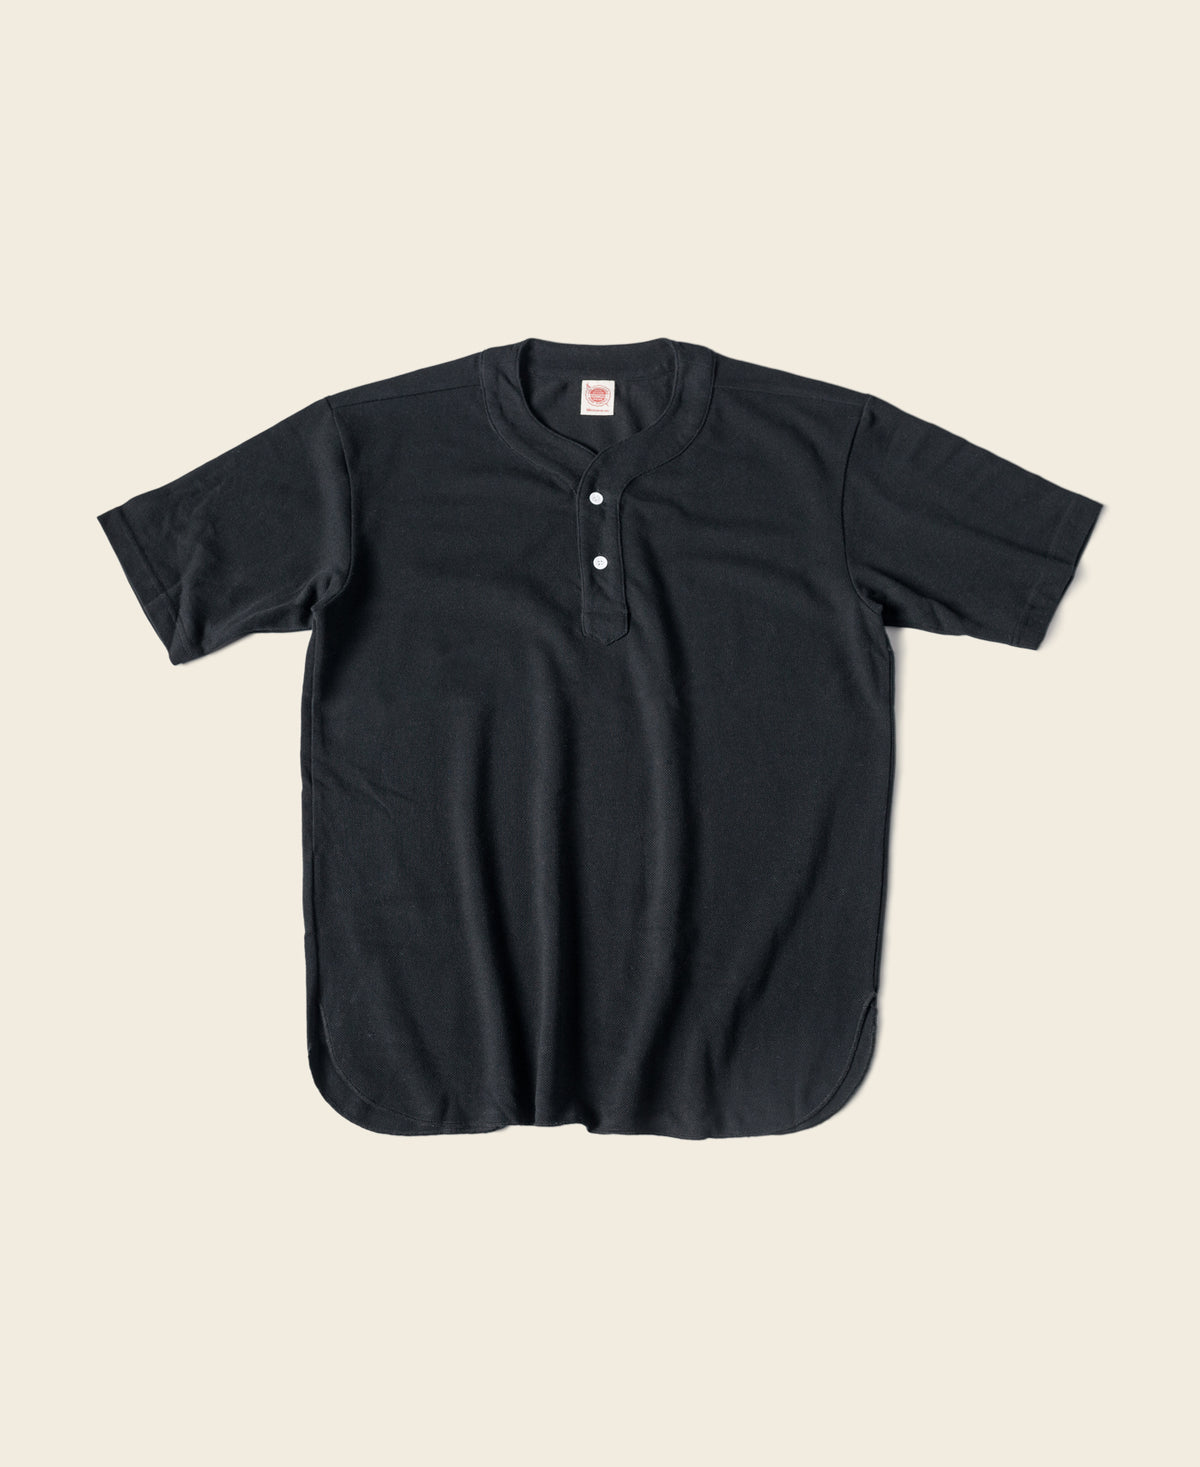 9.8 oz Cotton Pique Baseball T-Shirt - Black